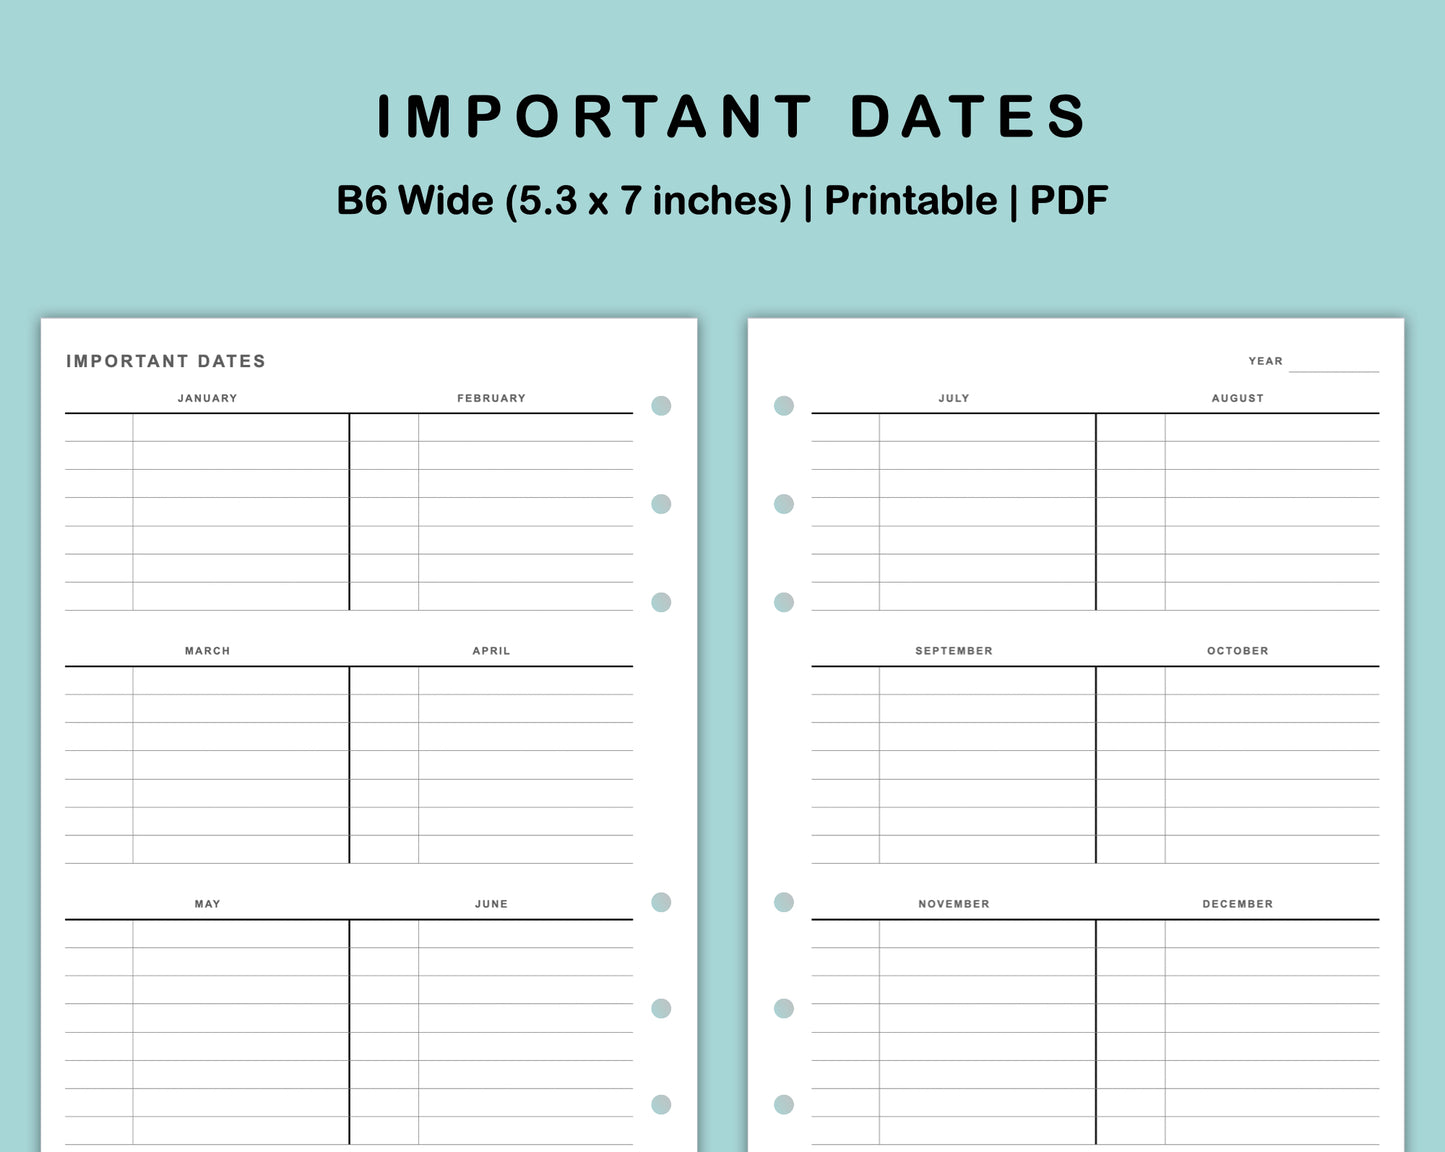 B6 Wide Inserts - Importanat Dates